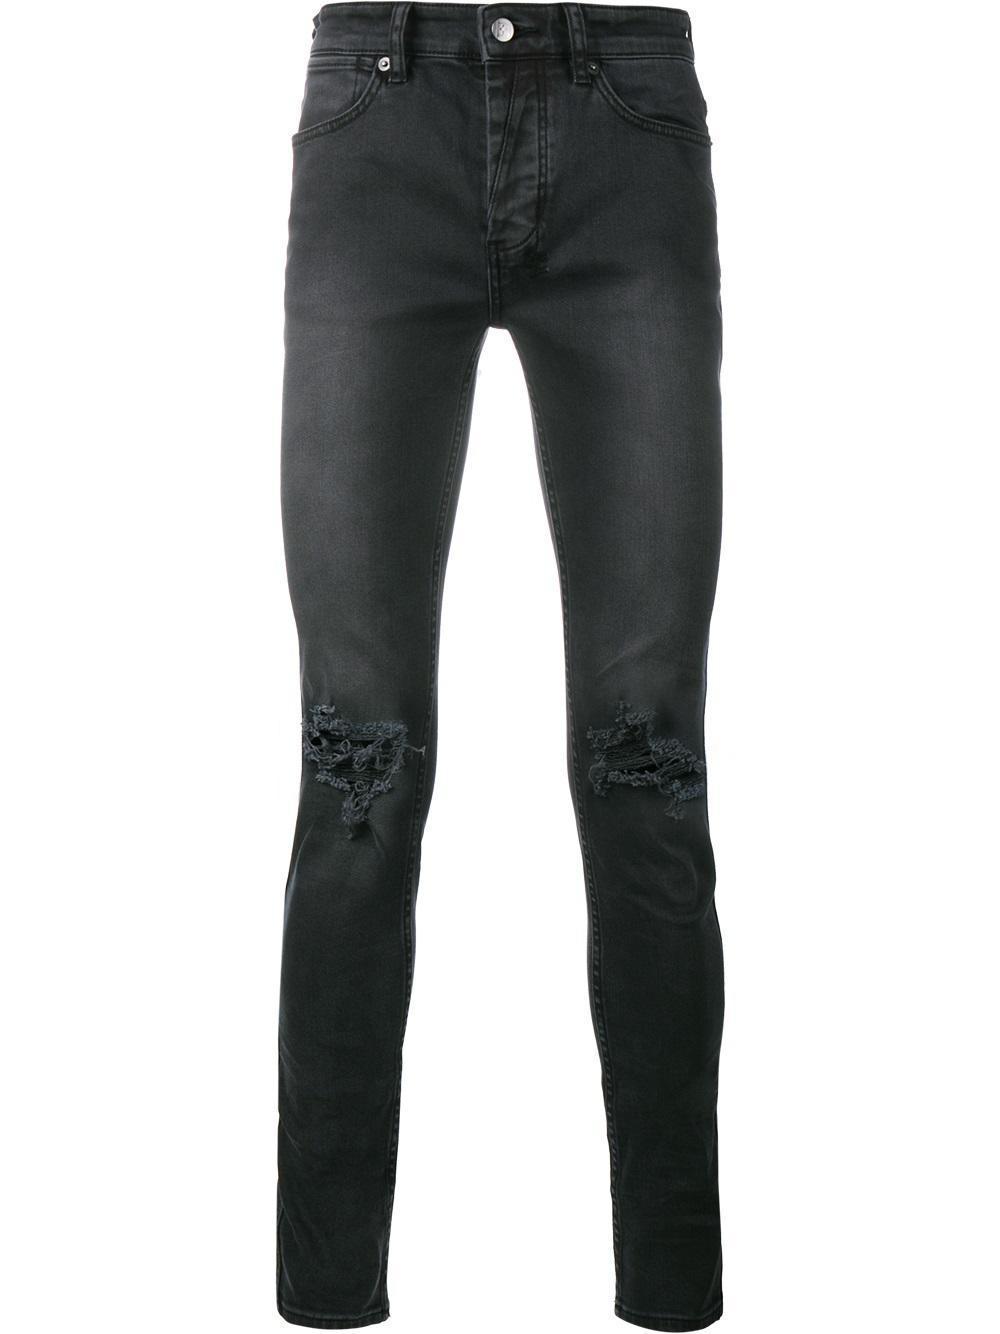 Ksubi Denim 'van Winkle' Jeans in Grey (Grey) for Men - Lyst